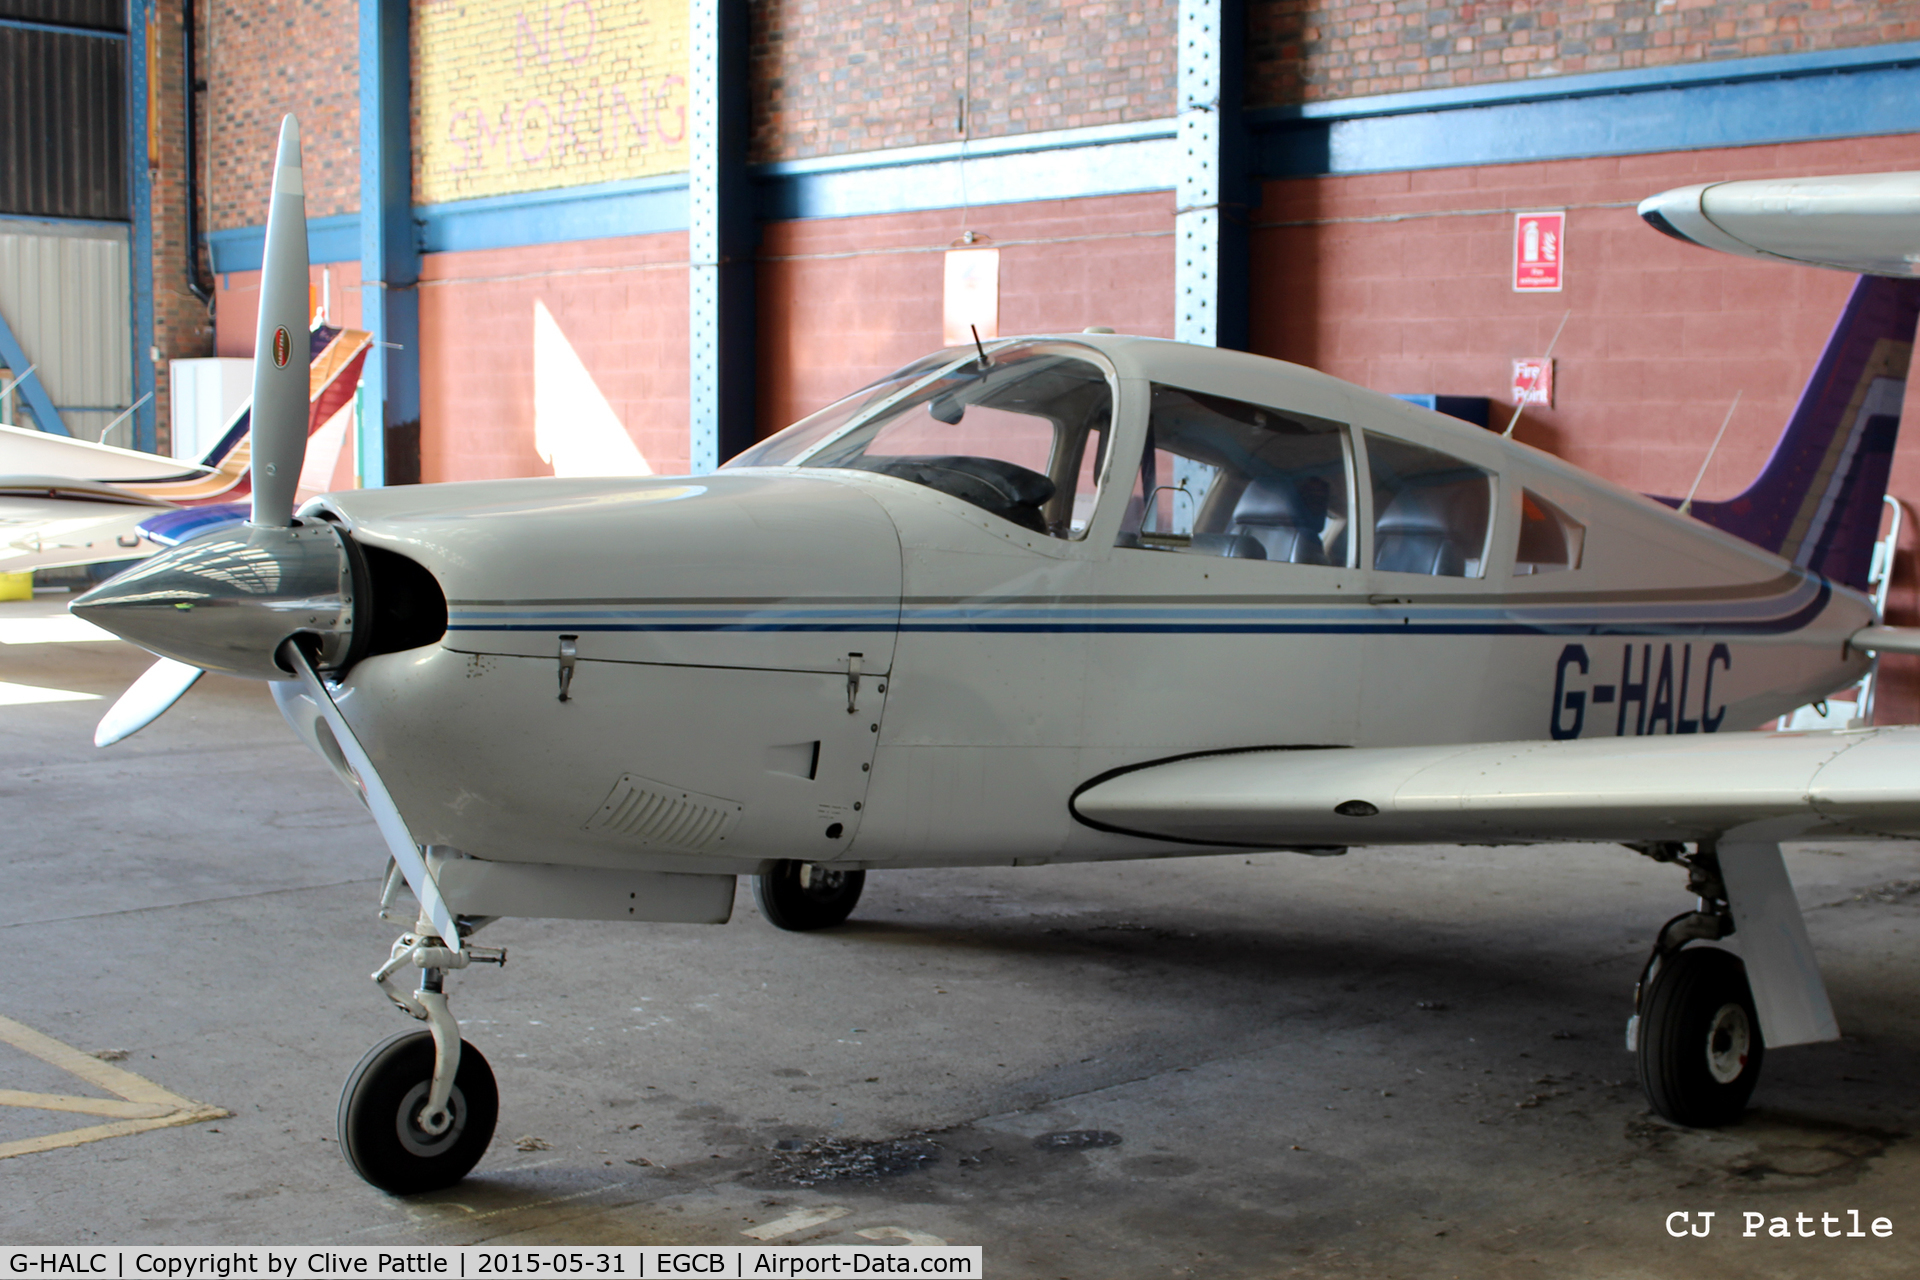 G-HALC, 1973 Piper PA-28R-200 Cherokee Arrow C/N 28R-7335042, Hangared at Barton Airfield, Manchester - EGCB